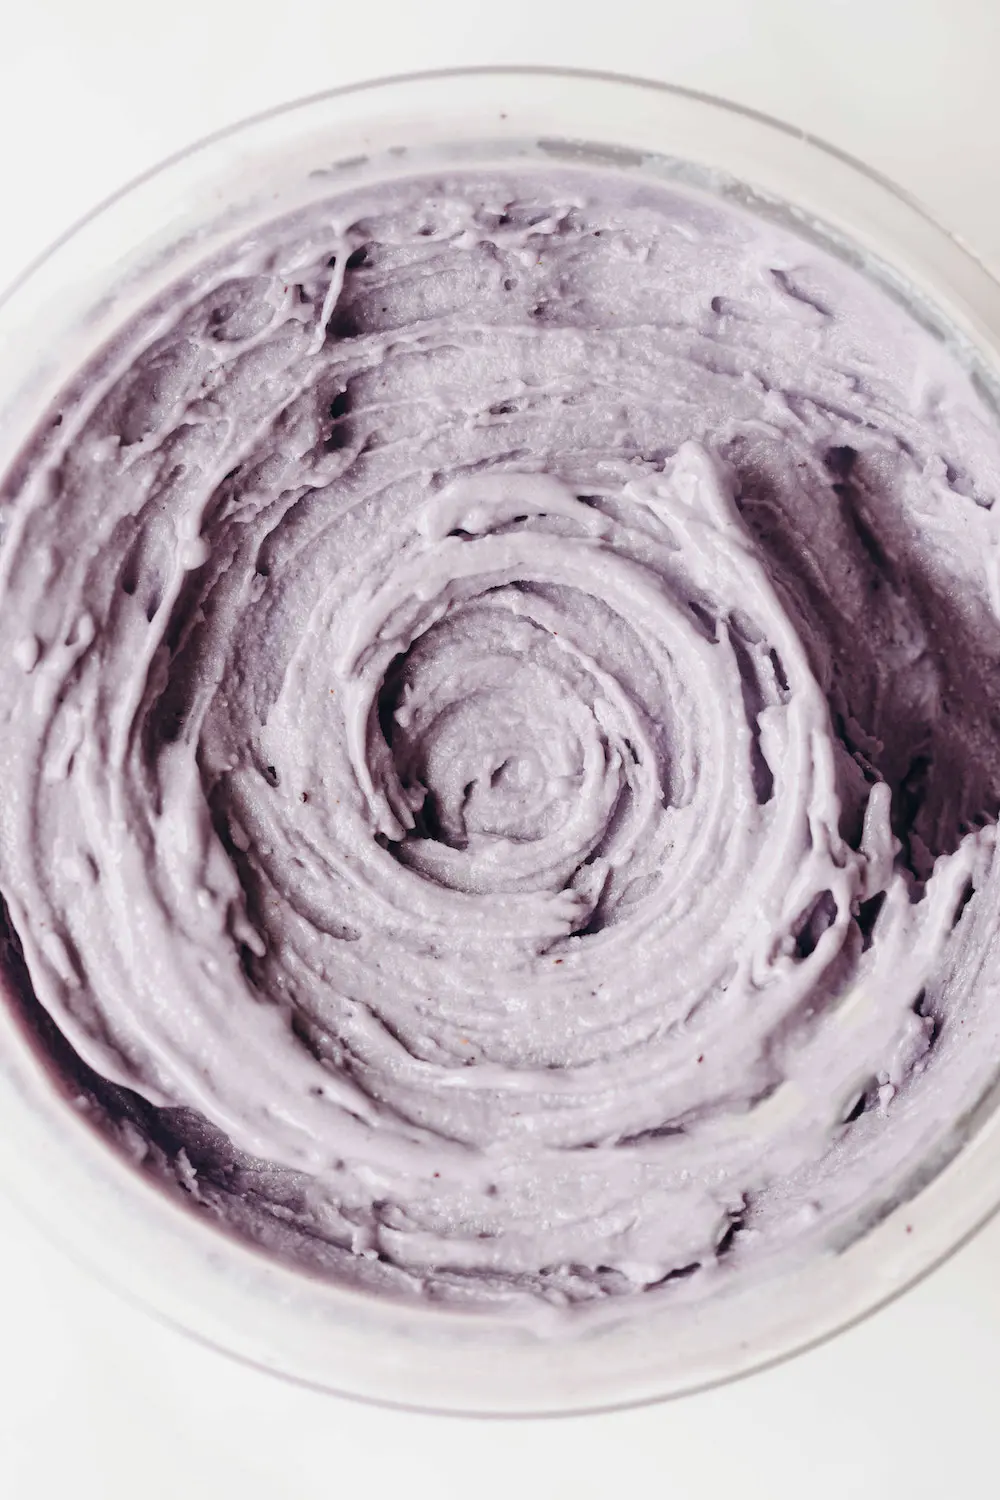 Dairy-Free Blueberry Protein Ice Cream